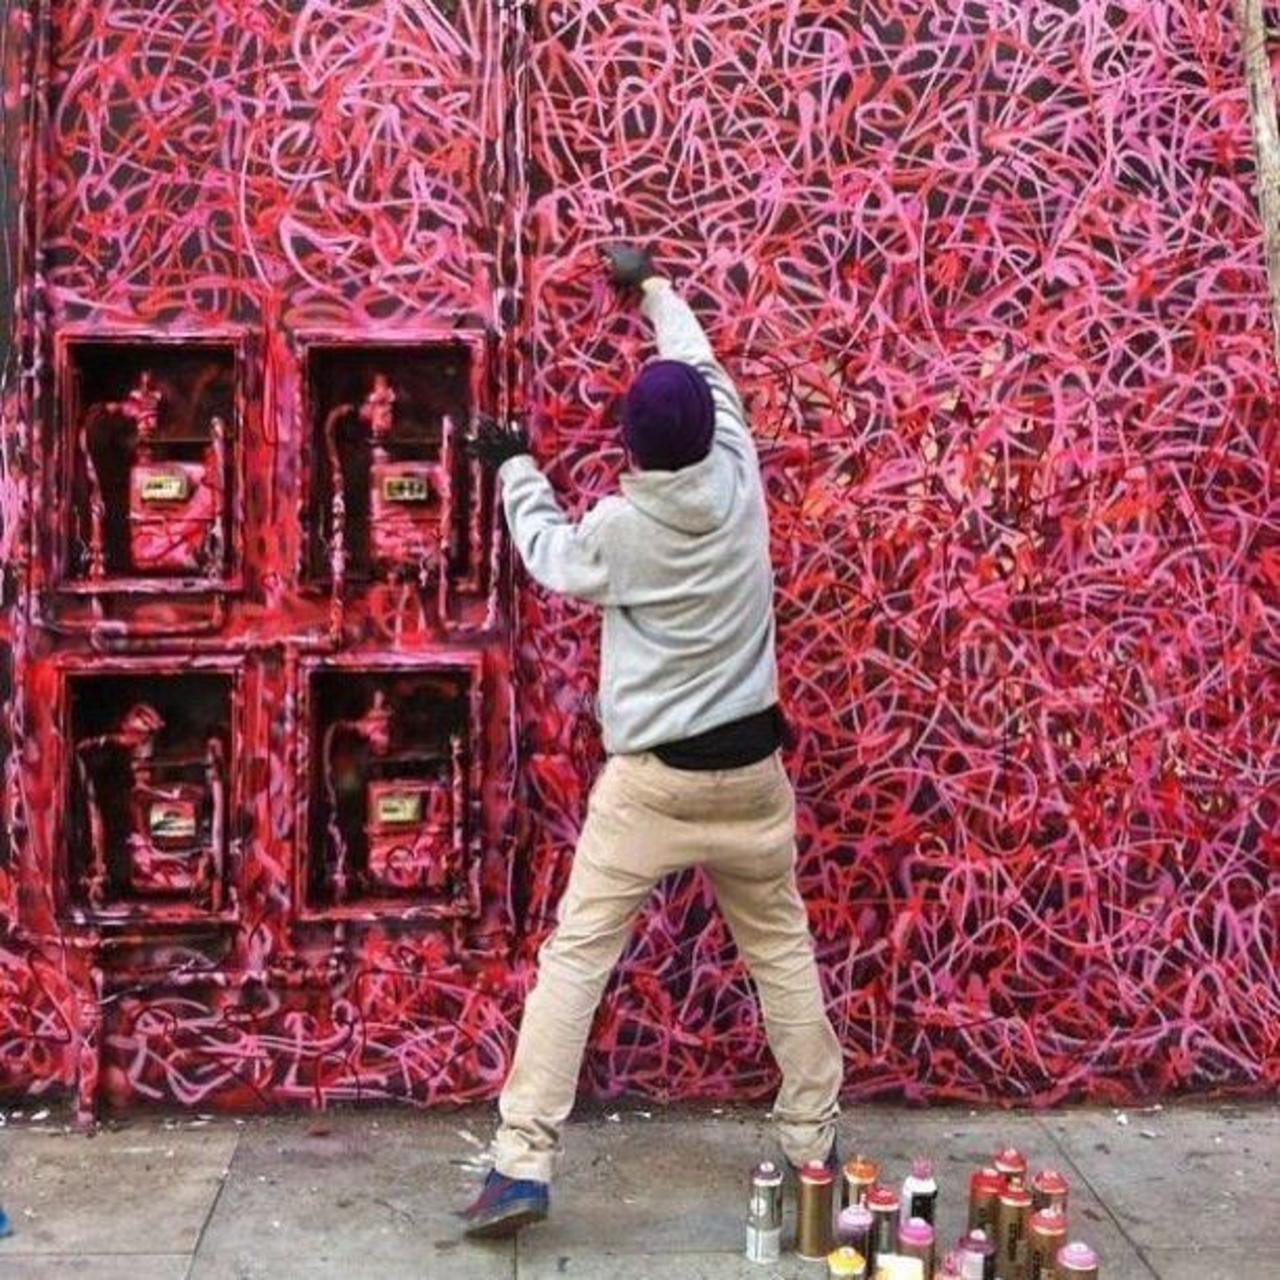 #Garabatting @Pinterest #graffiti #pink #wall #art http://t.co/0M5VTijGXi